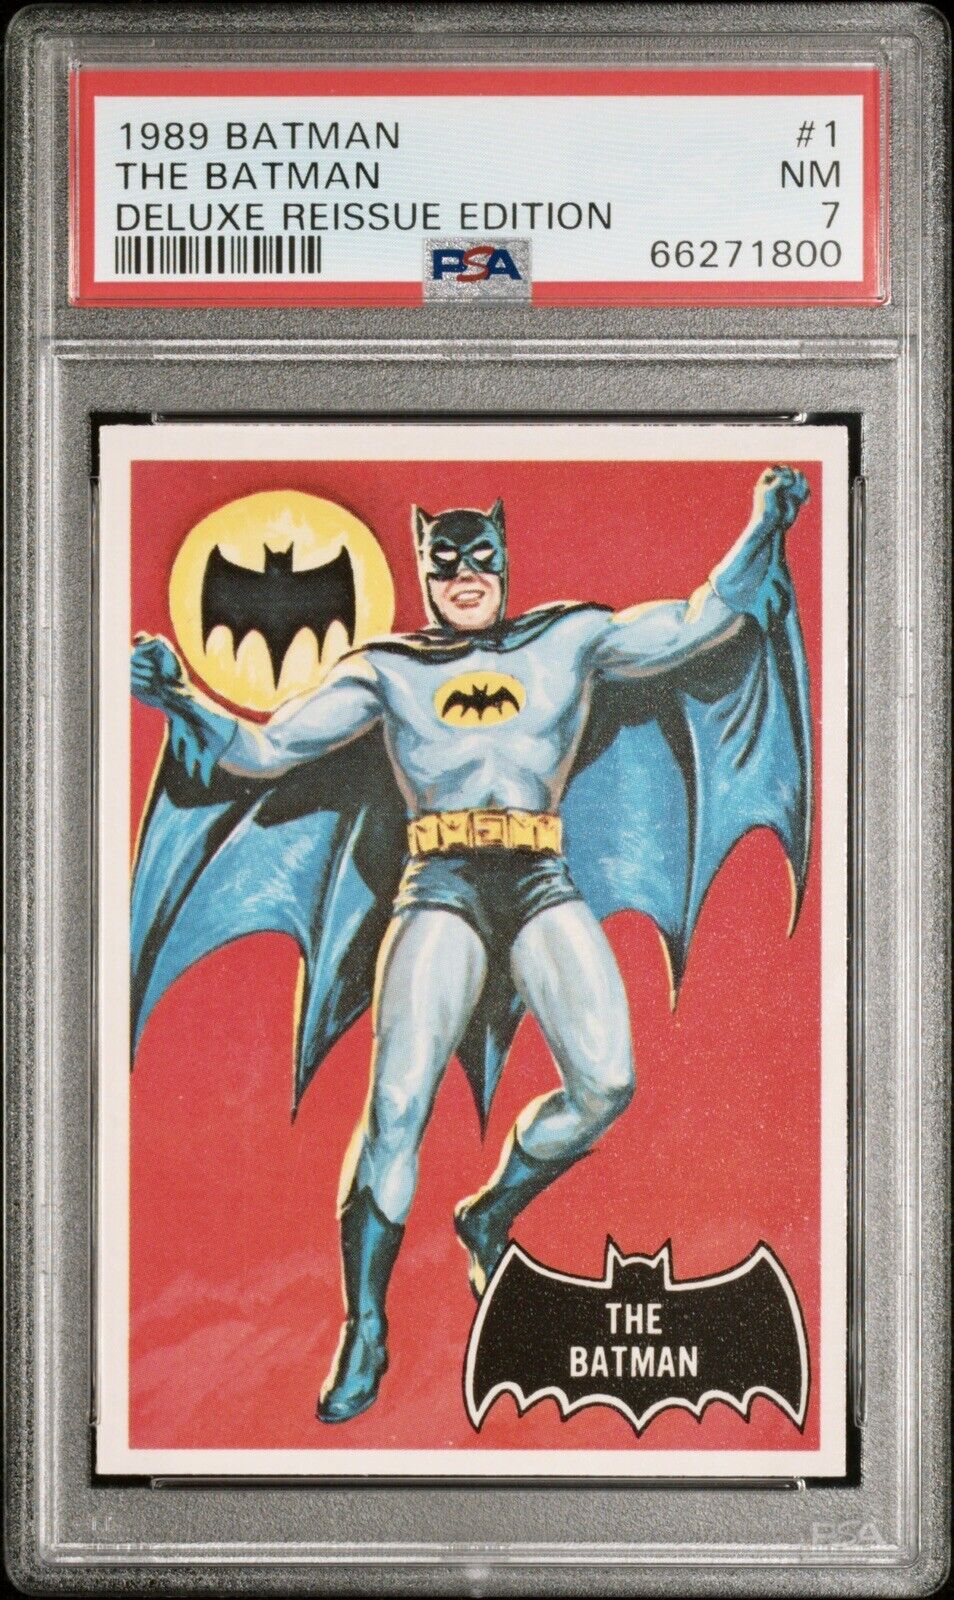 1966 The Batman PSA 7 Black Bat #1 Card 1989 Deluxe Reissue Wayne Joker Robin